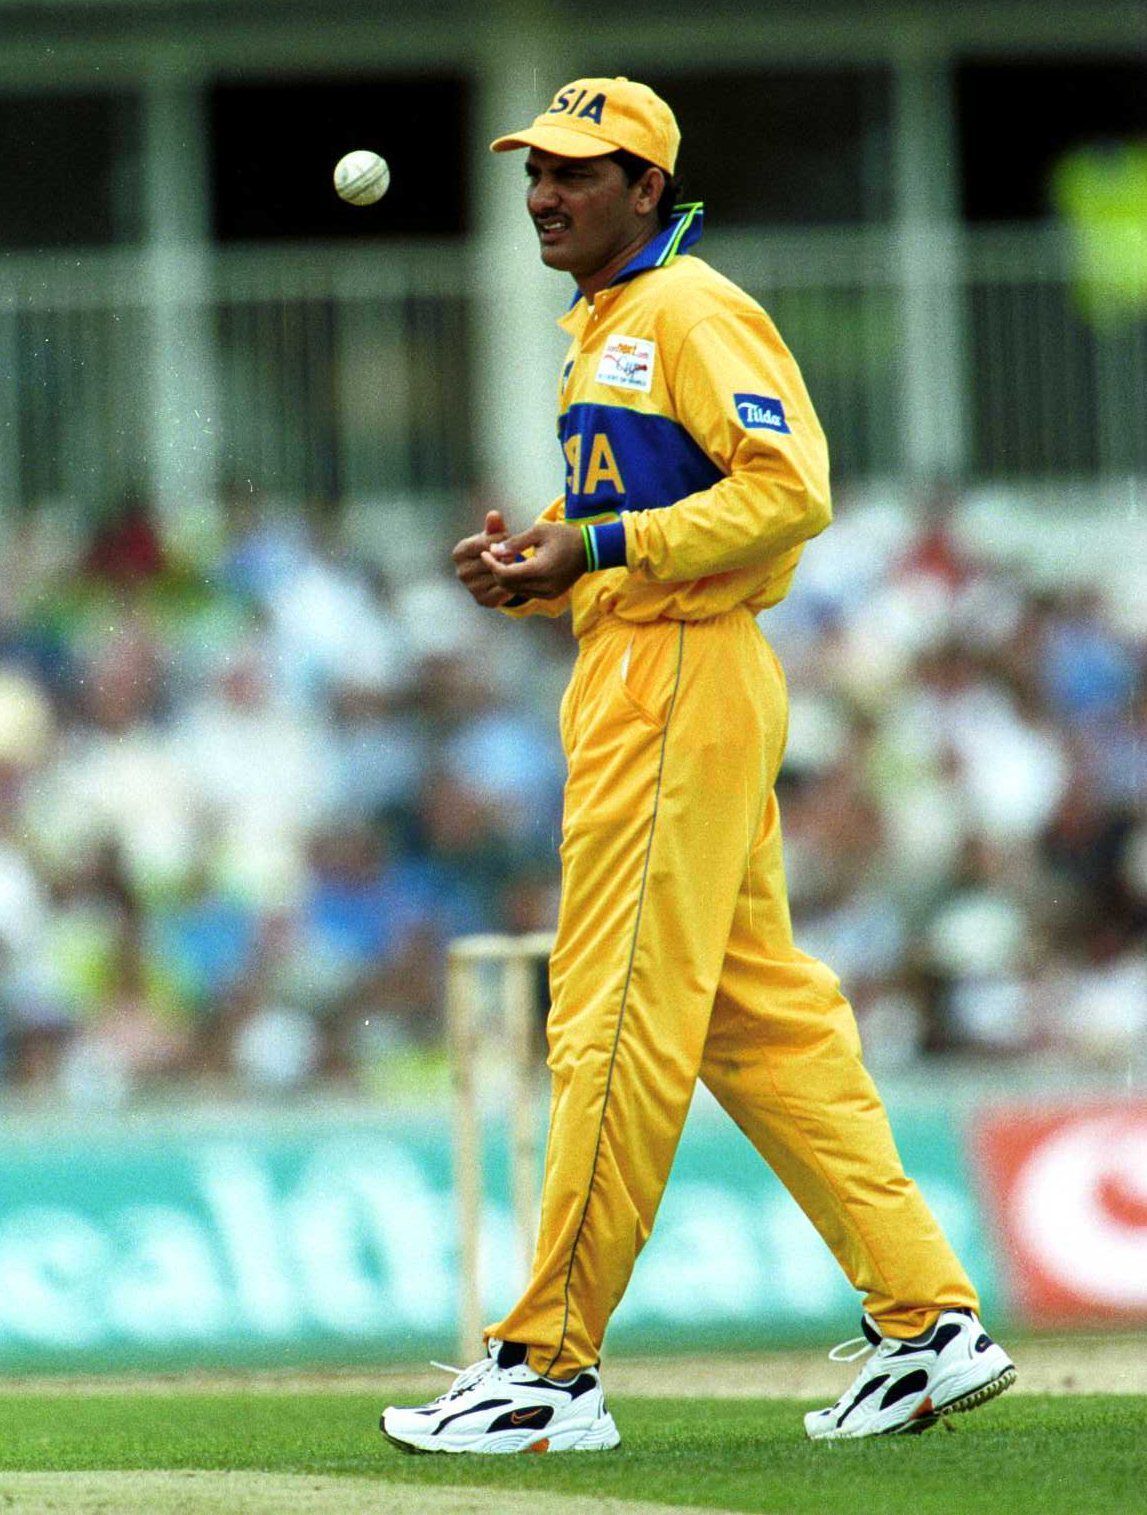 Azharuddin scored the fastest ODI century (in 1988) vs New Z